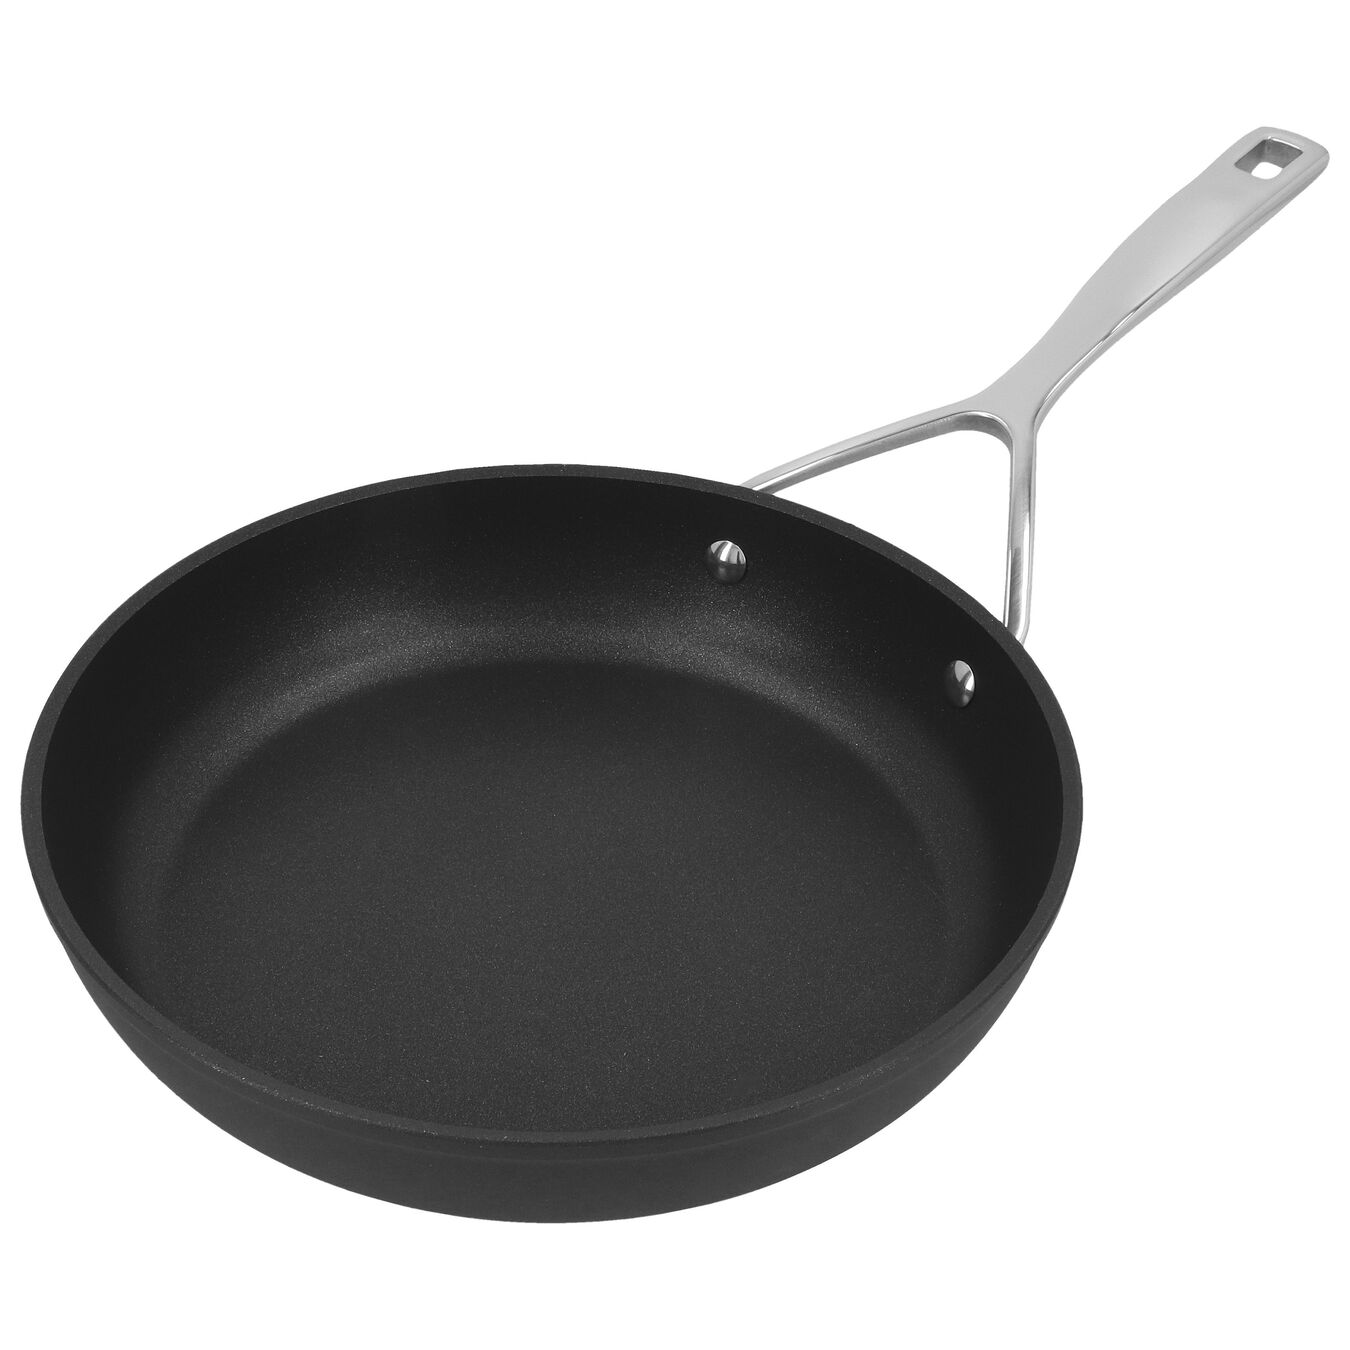 24 cm Aluminum Frying pan silver-black,,large 2